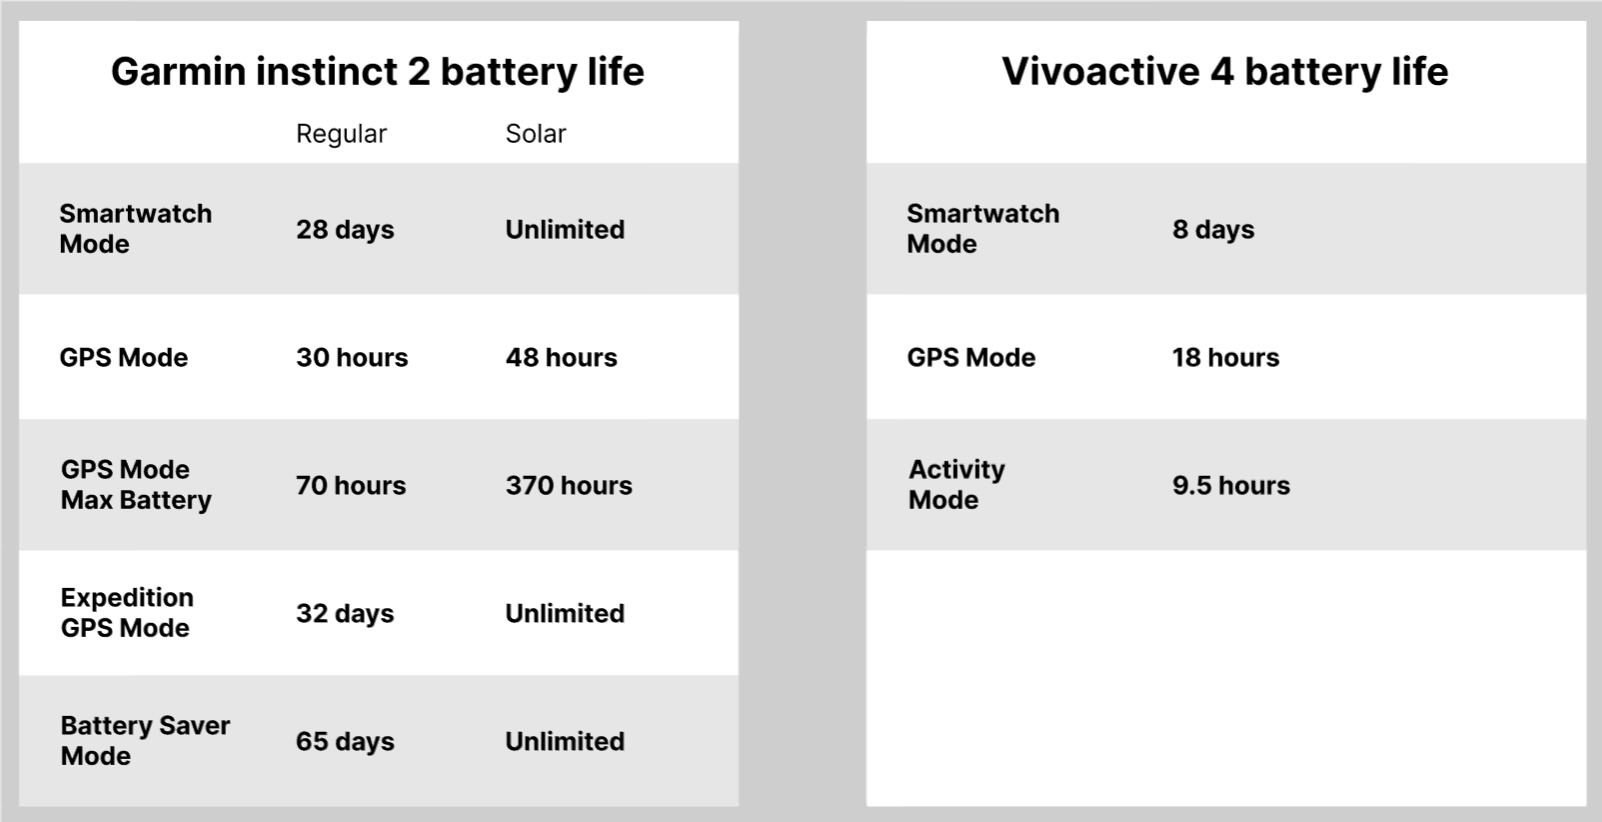 Garmin instinct 2 vs Vivoactive 4 battery life